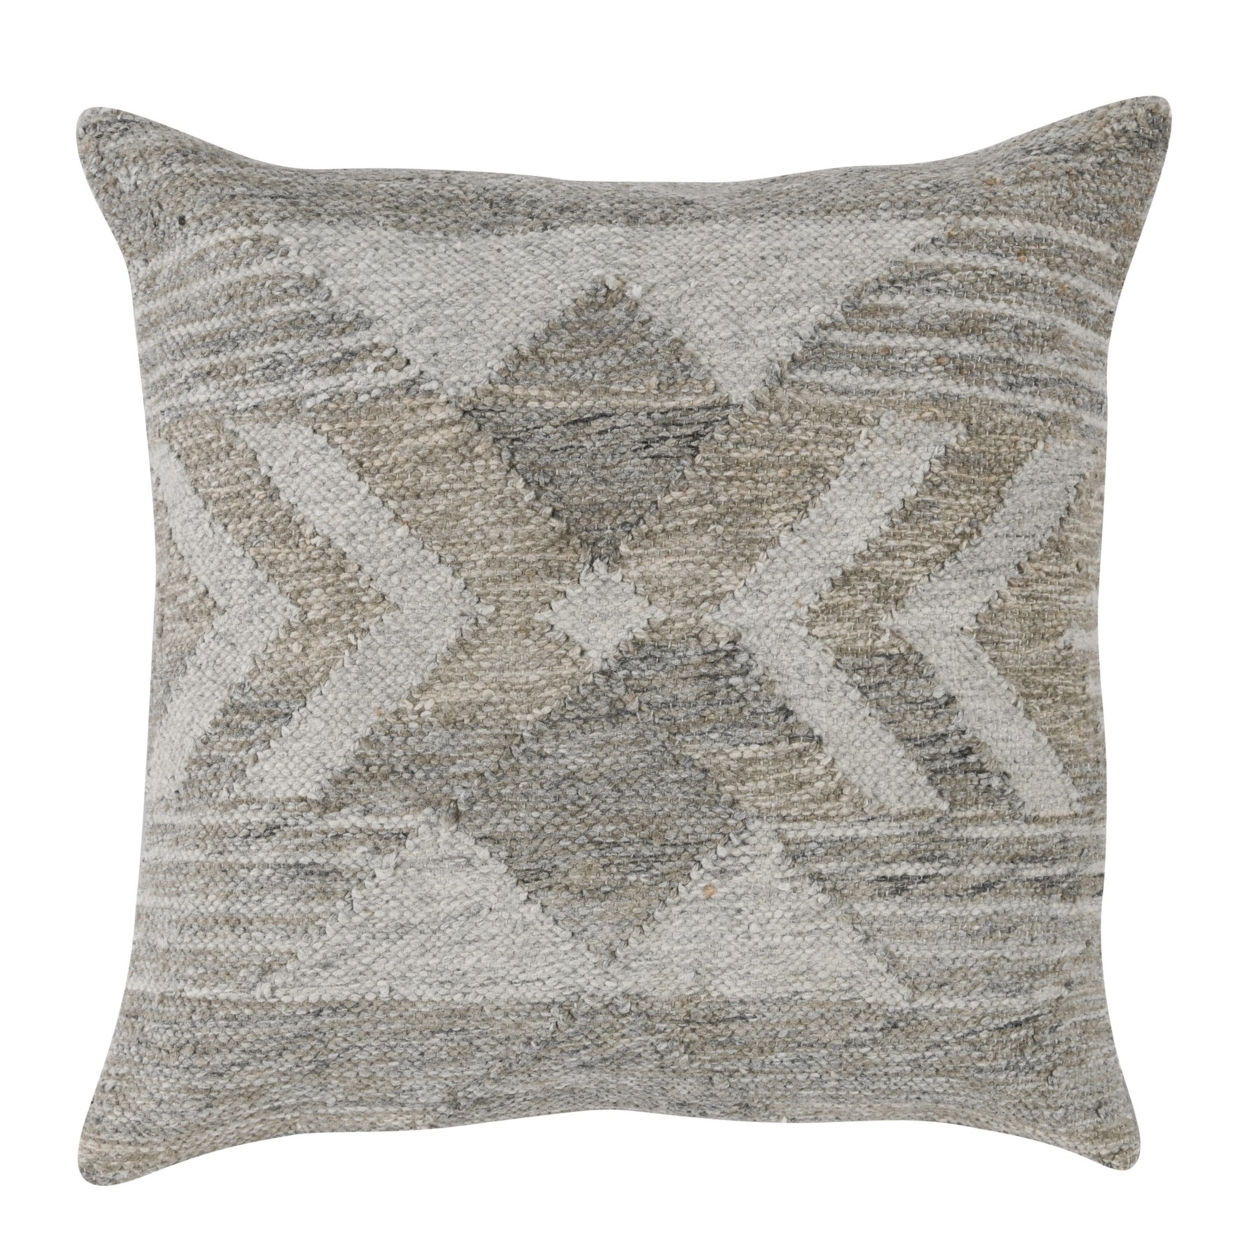 Jai 22 X 22 Outdoor Accent Throw Pillow, Textured Handwoven Gray Polyester- Saltoro Sherpi